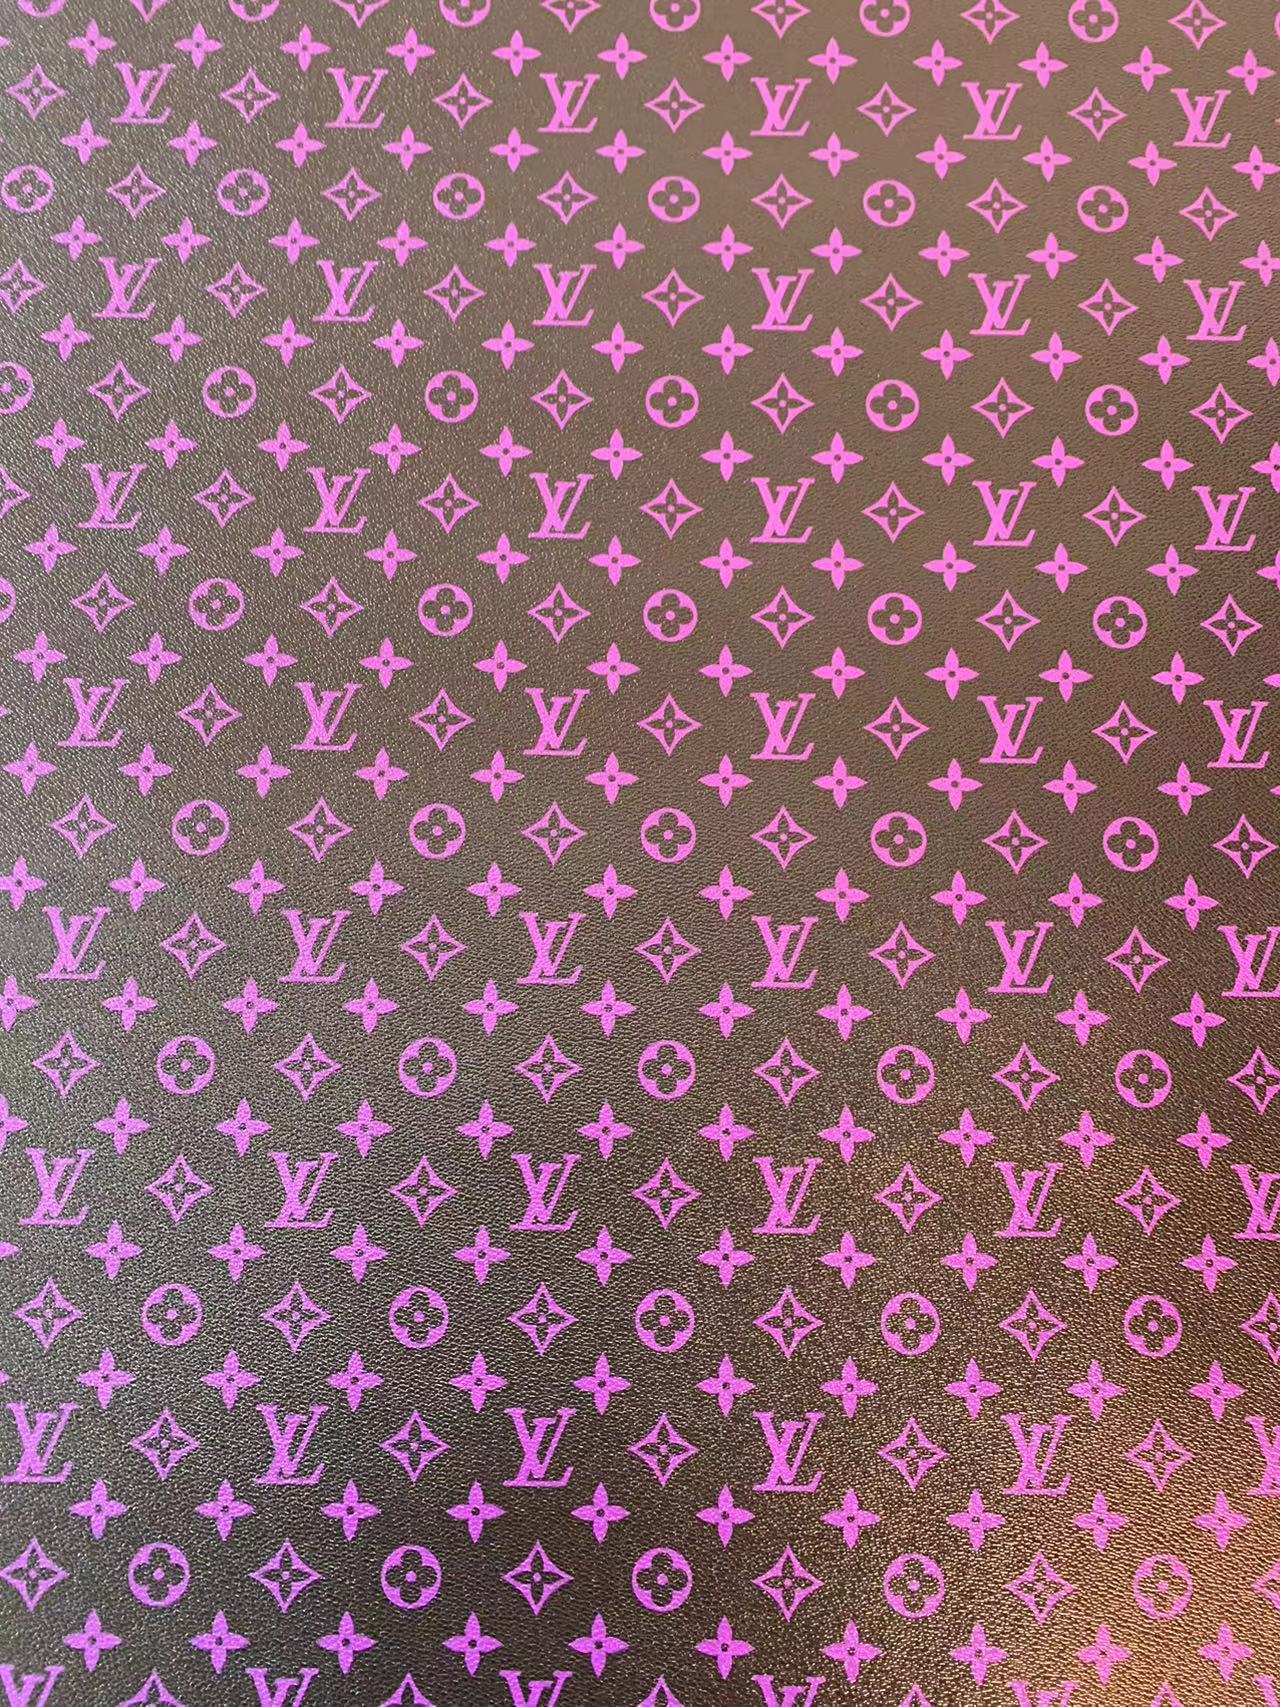 Purple lv wallpapaer  Louis vuitton iphone wallpaper, Bape